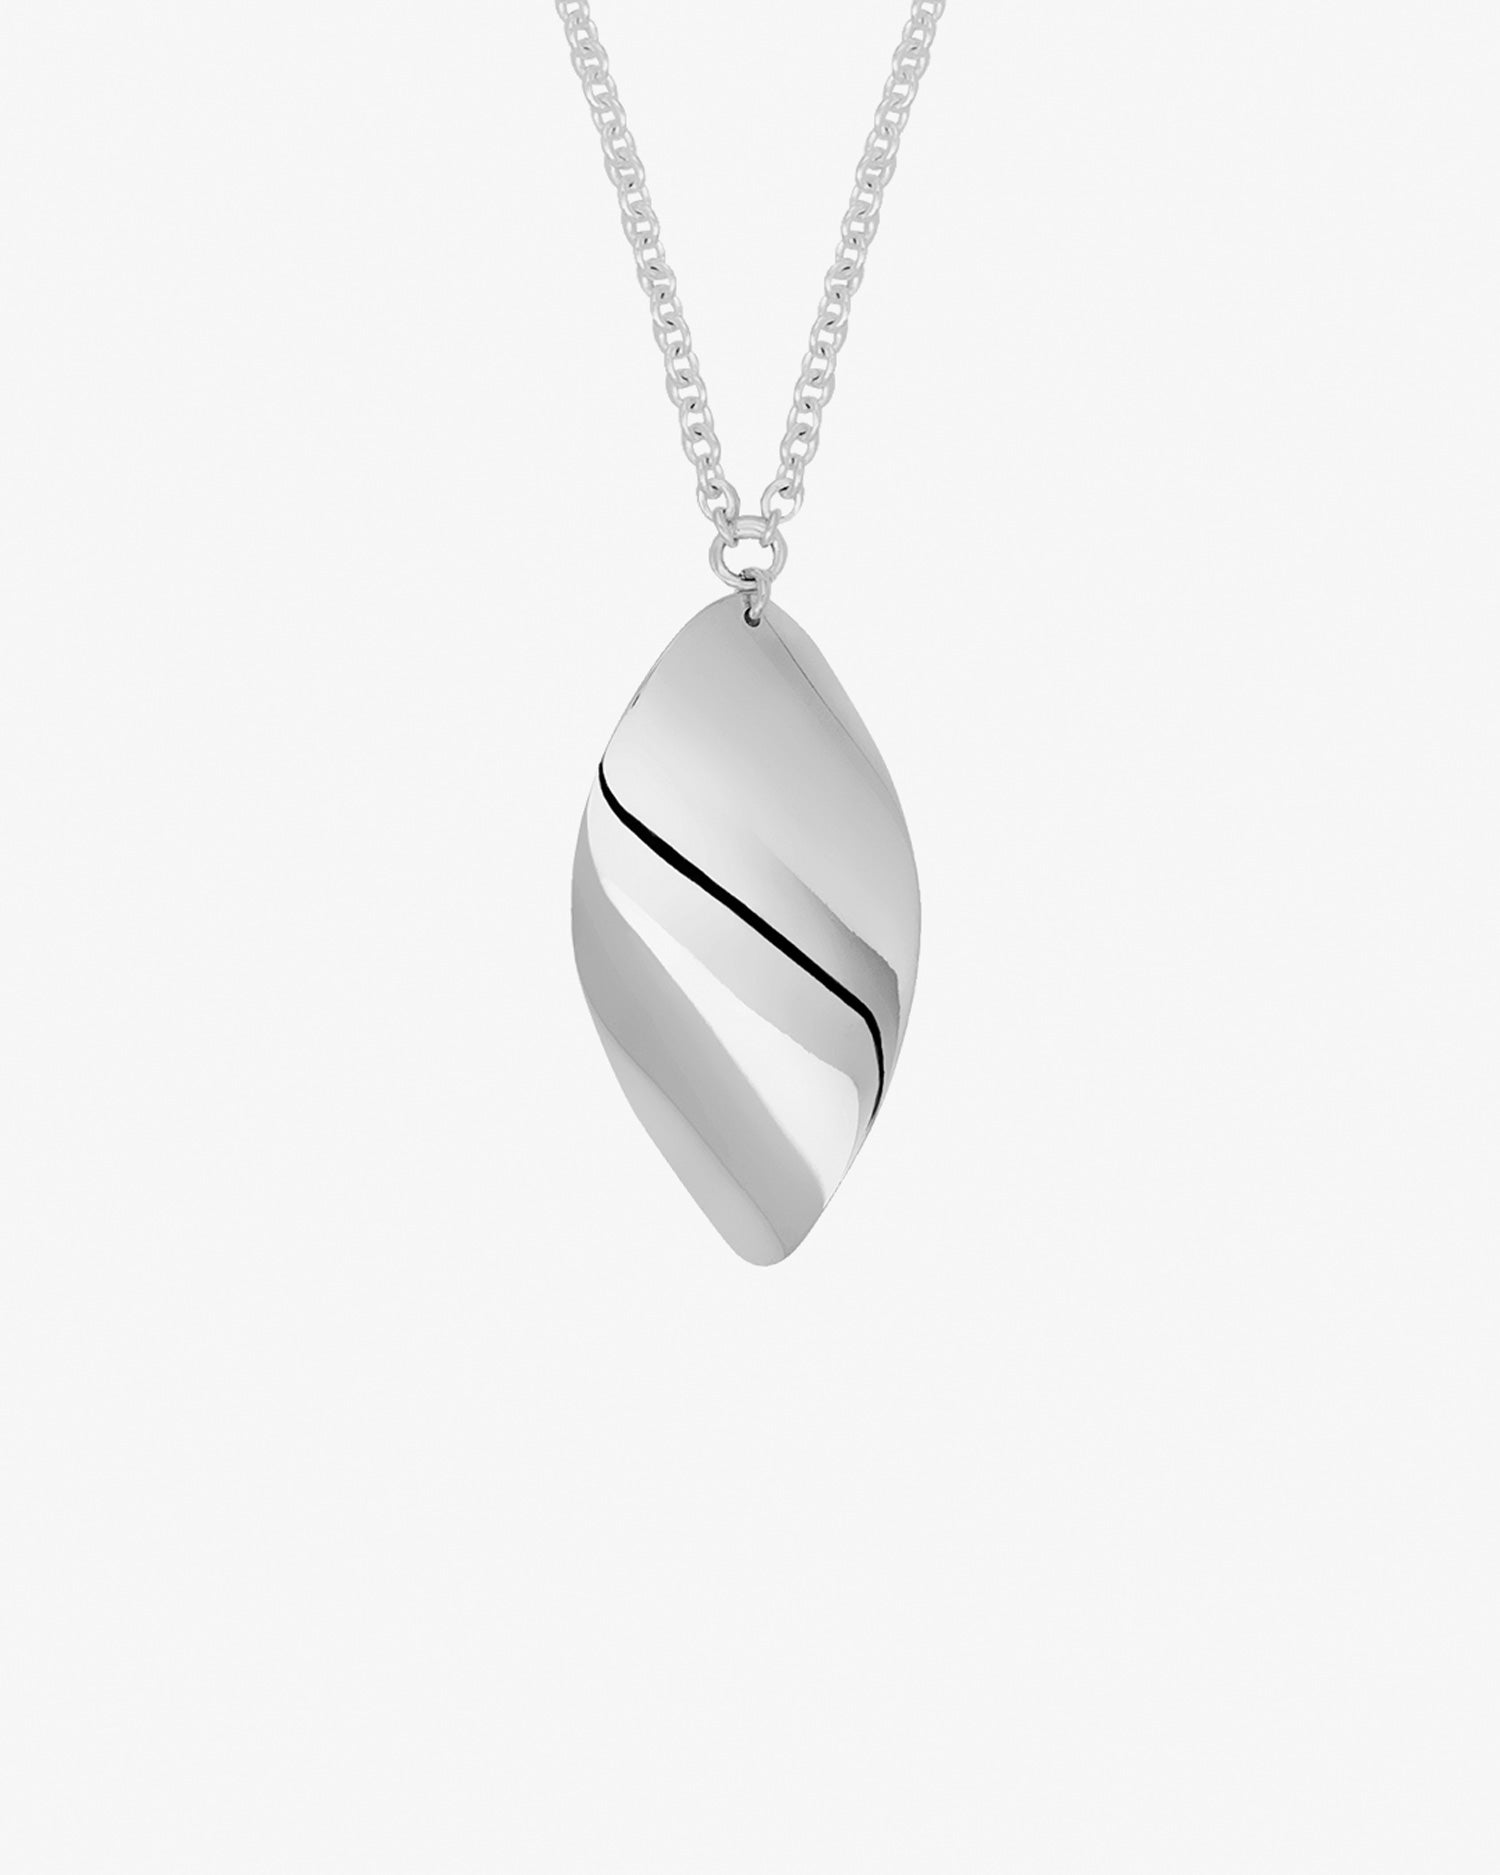 Aqua-single-necklace